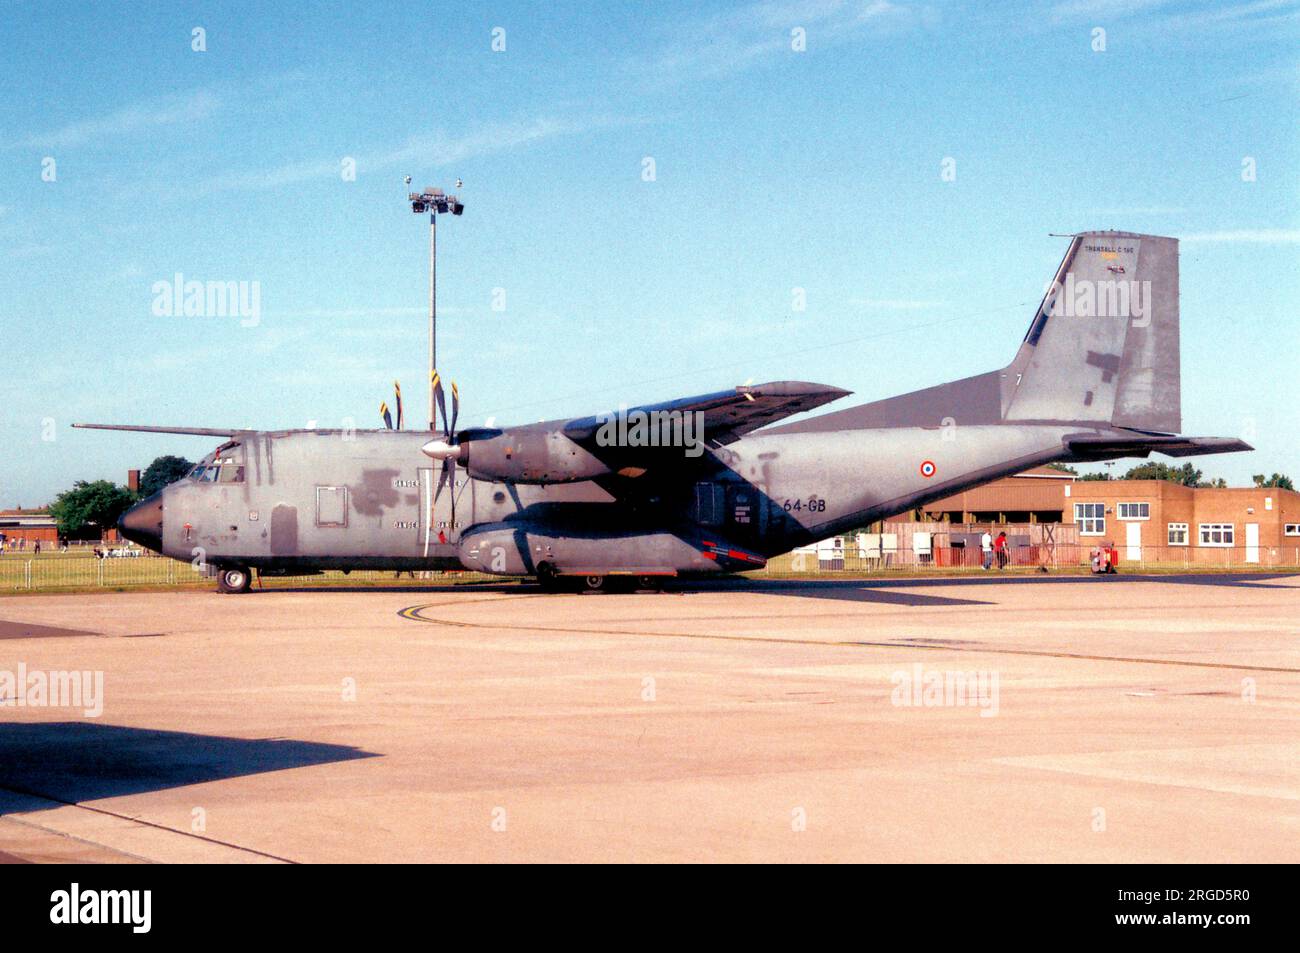 Armee de l'Air - Transall C-160R 64-GB (msn R202), de FT.64. (Transall - transport Allianz). Banque D'Images